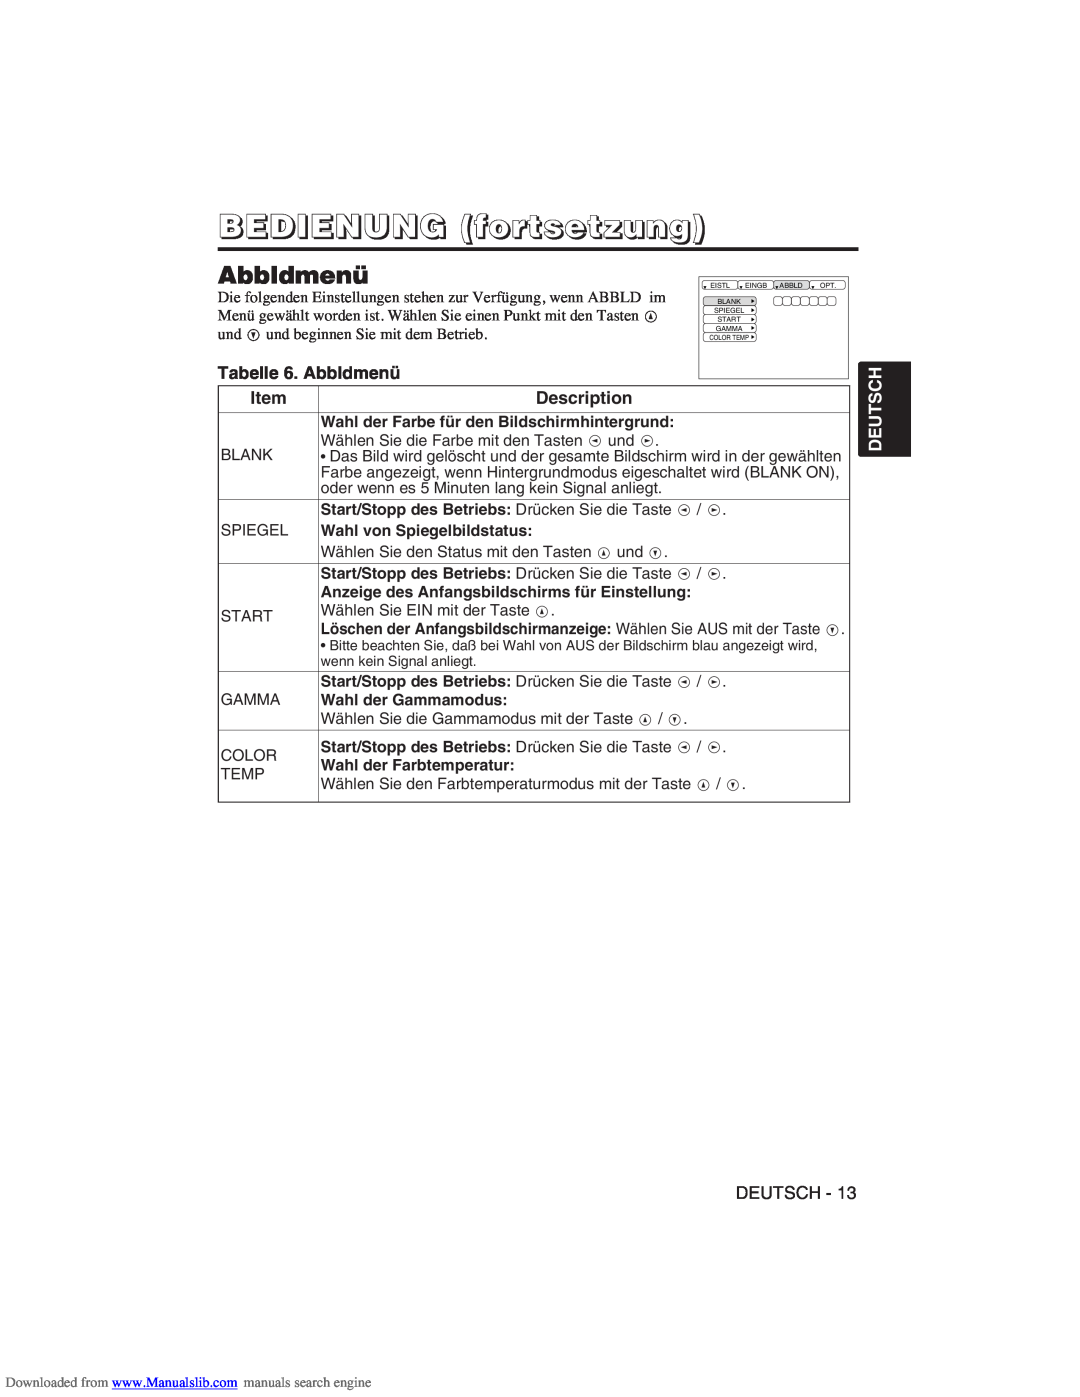 Hitachi CP-X275W user manual Tabelle 6. Abbldmenü, BEDIENUNG fortsetzung, Item, Description, Deutsch 